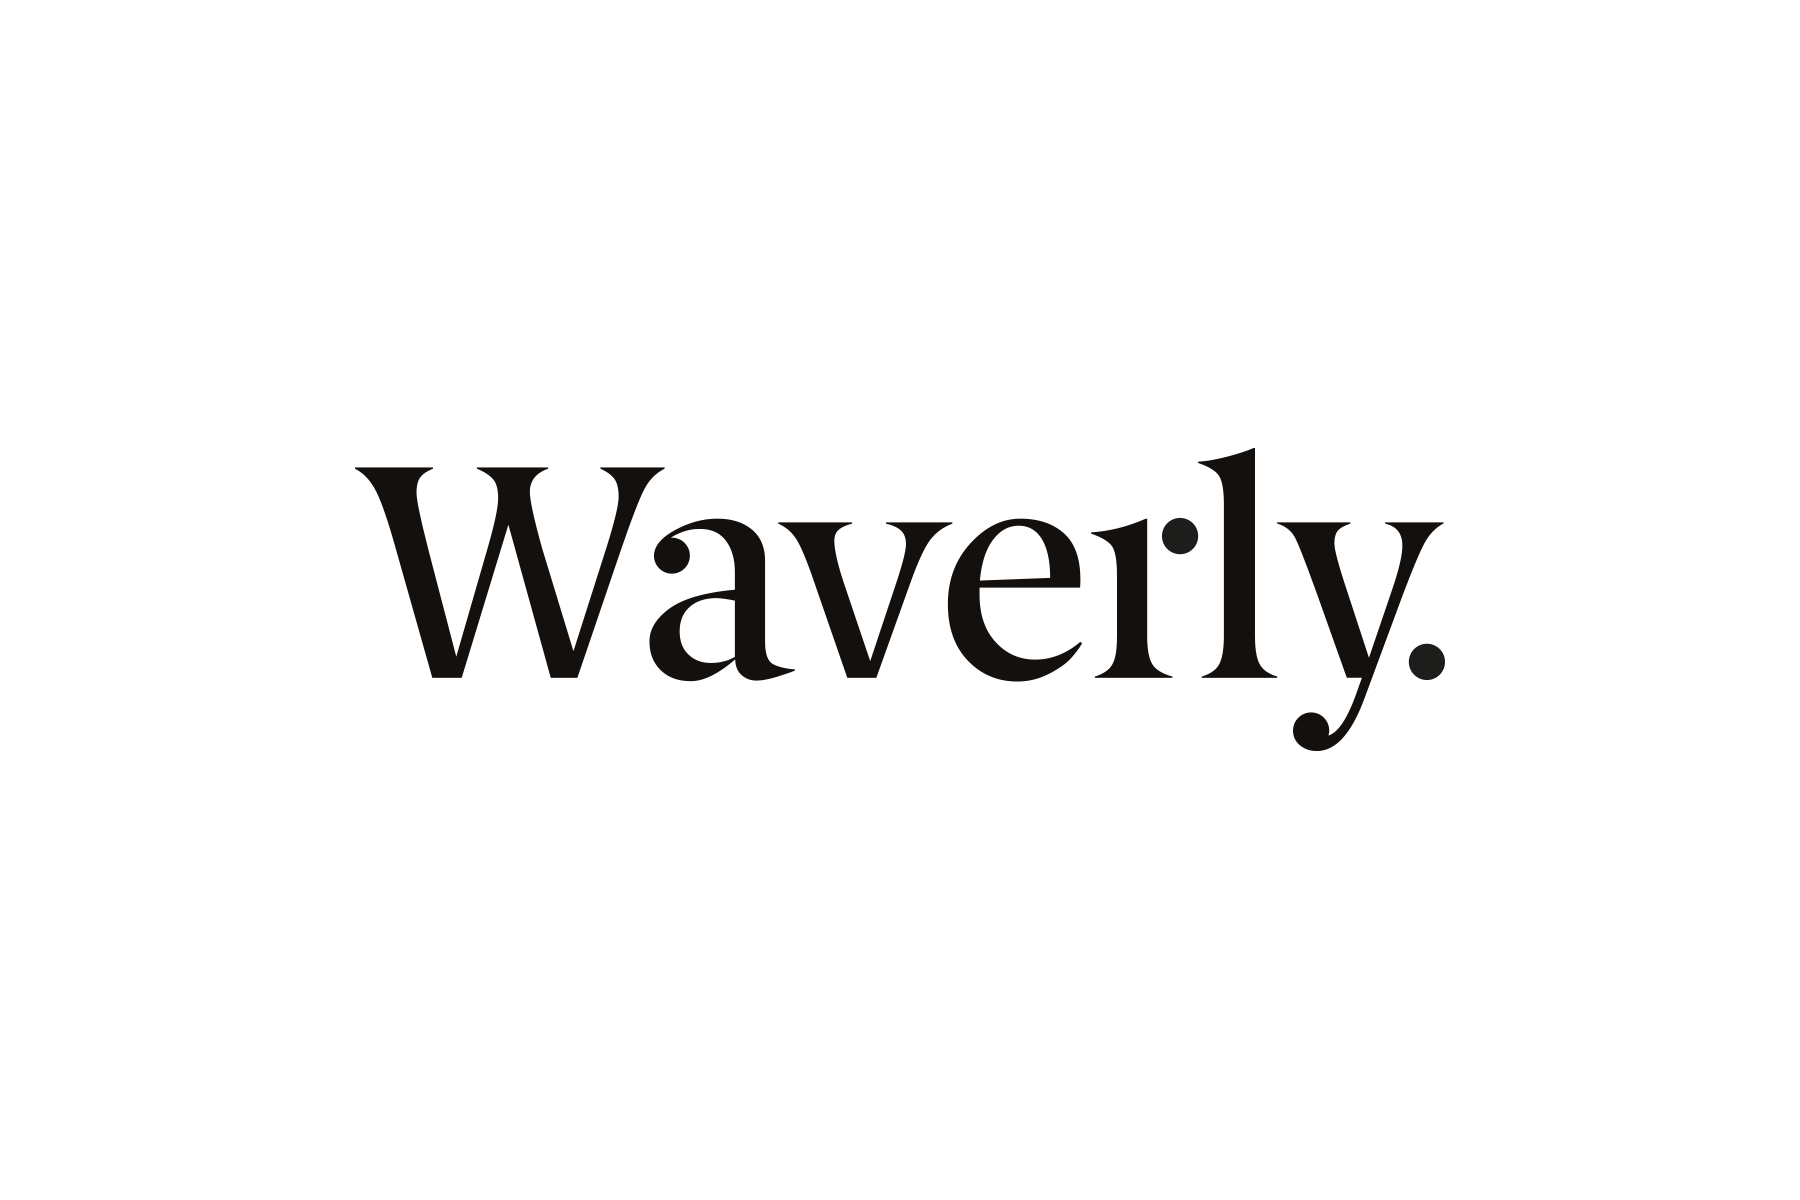 Waverly_Logo_RVB_VF.png